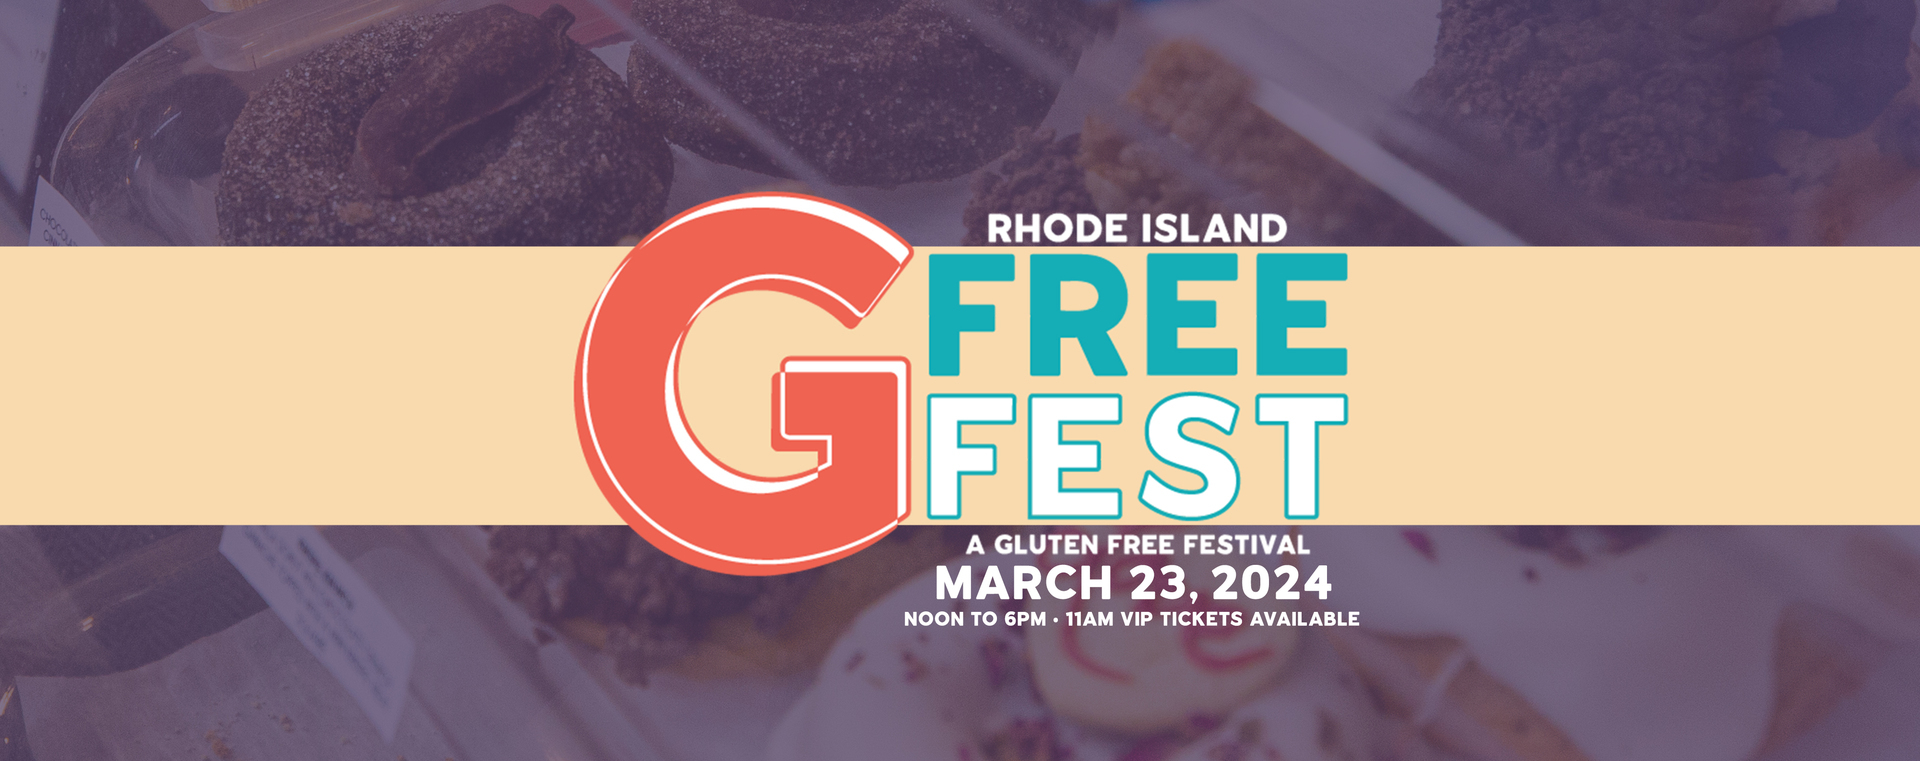 GFree Fest - Rhode Island's Gluten Free Festival, Providence, Rhode Island, United States